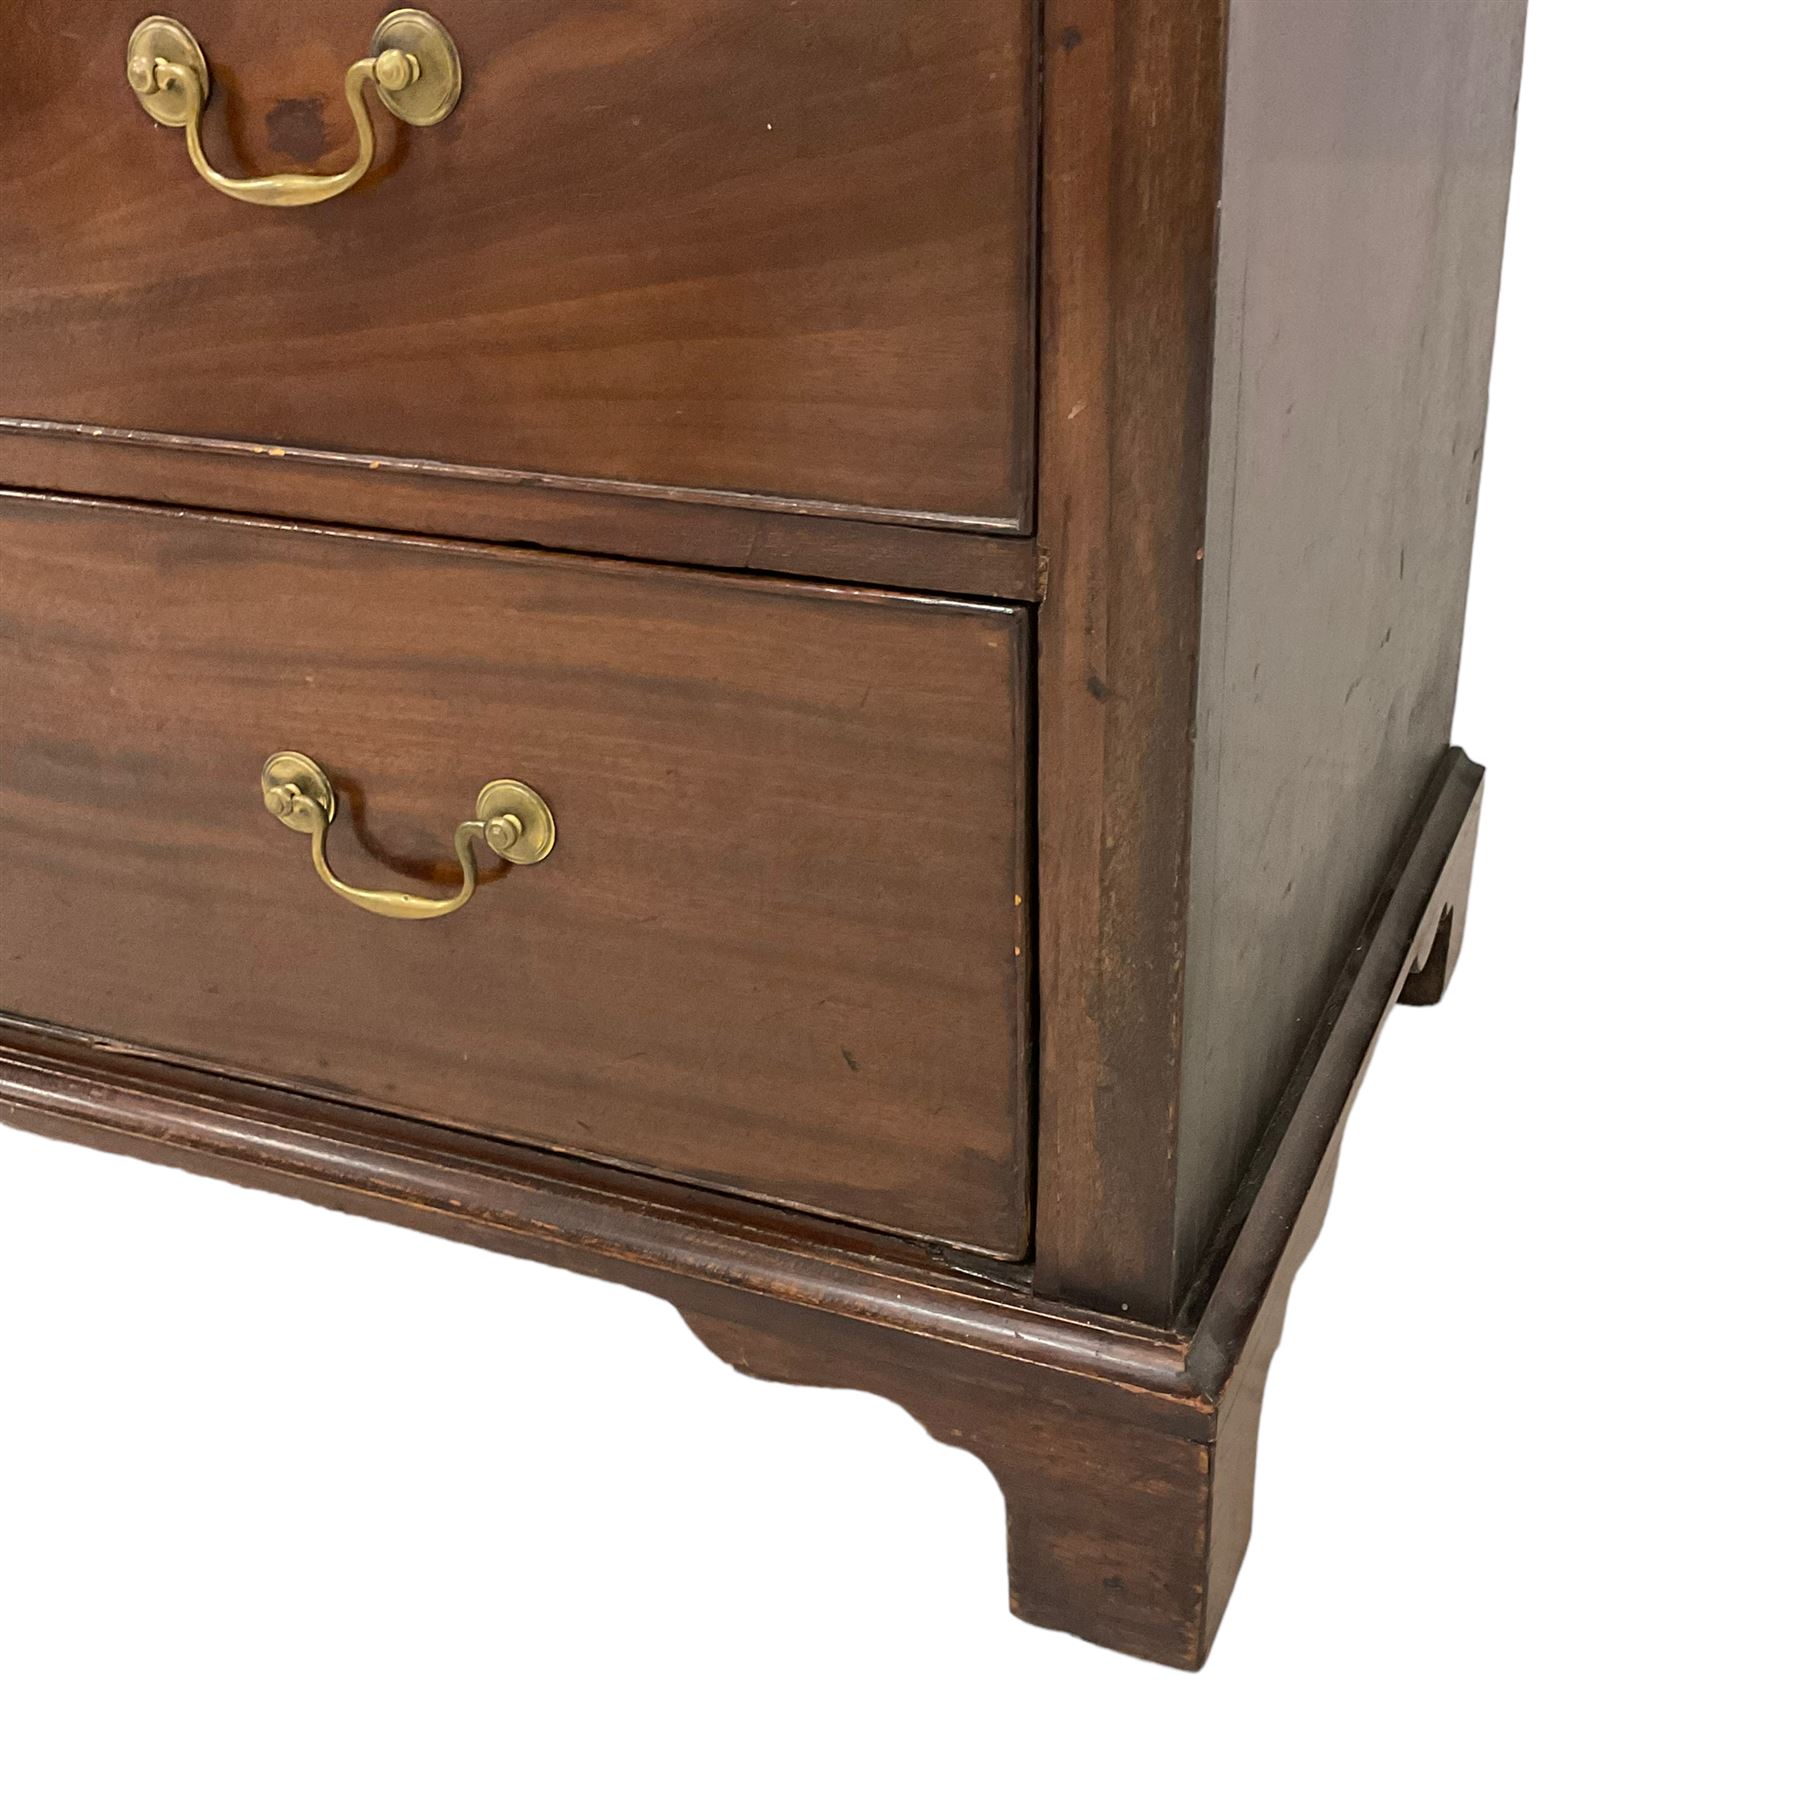 George III mahogany chest - Image 4 of 8